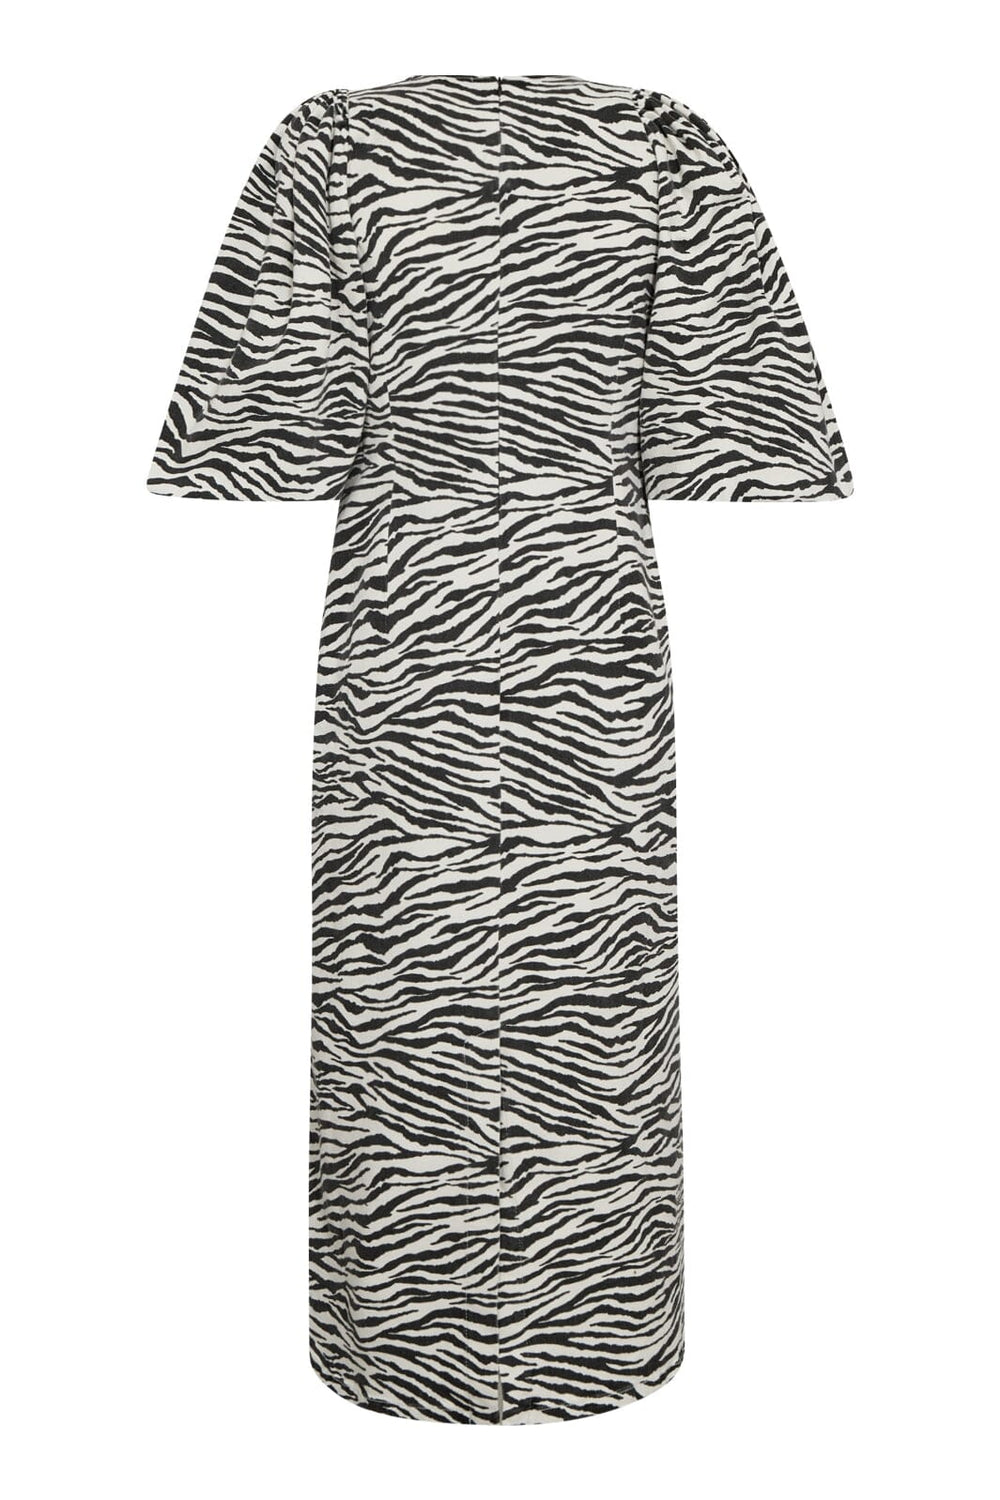 Forudbestilling - Co´couture - Zioncc Zebra Puff Dress 36425 - 1196 Offwhite-Black Kjoler 